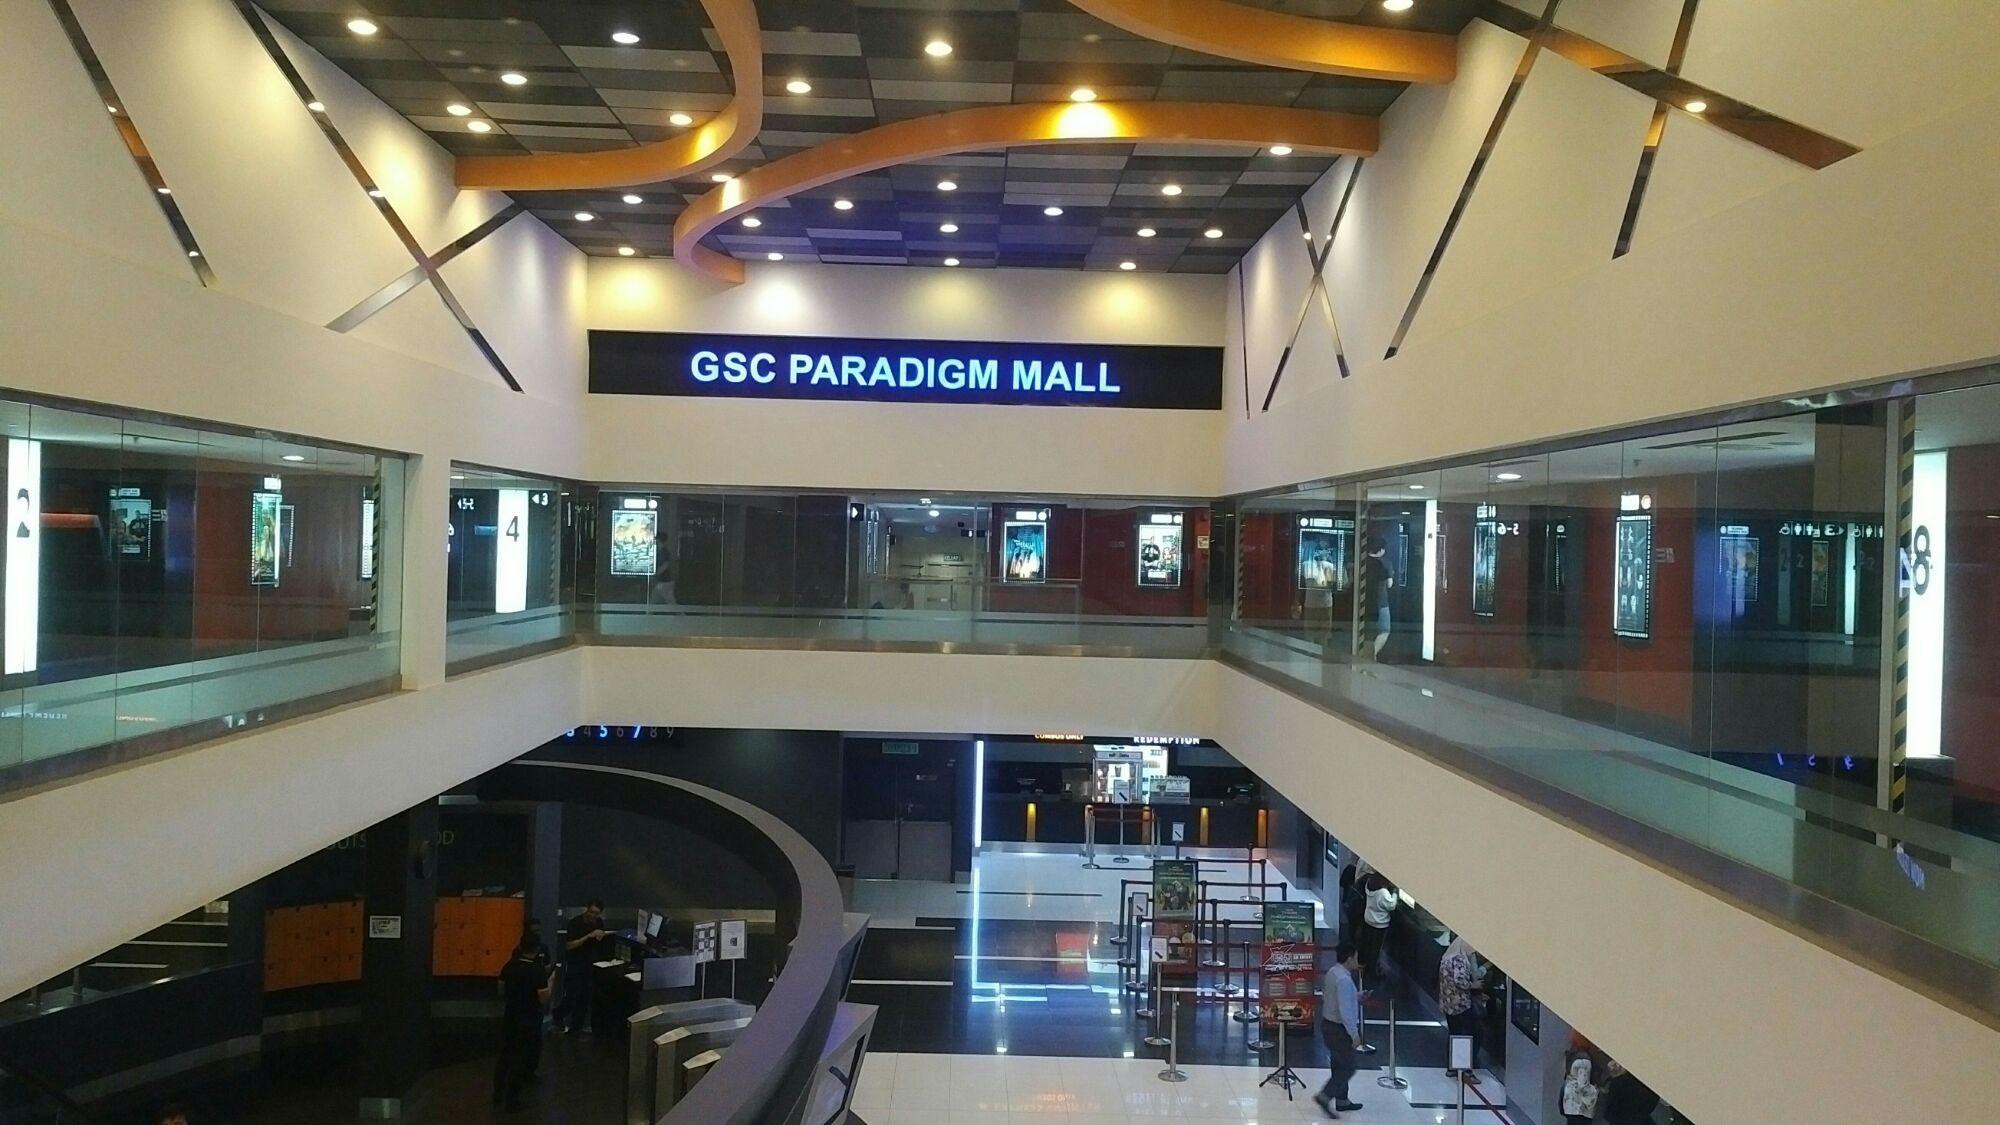 Gsc paradigm mall